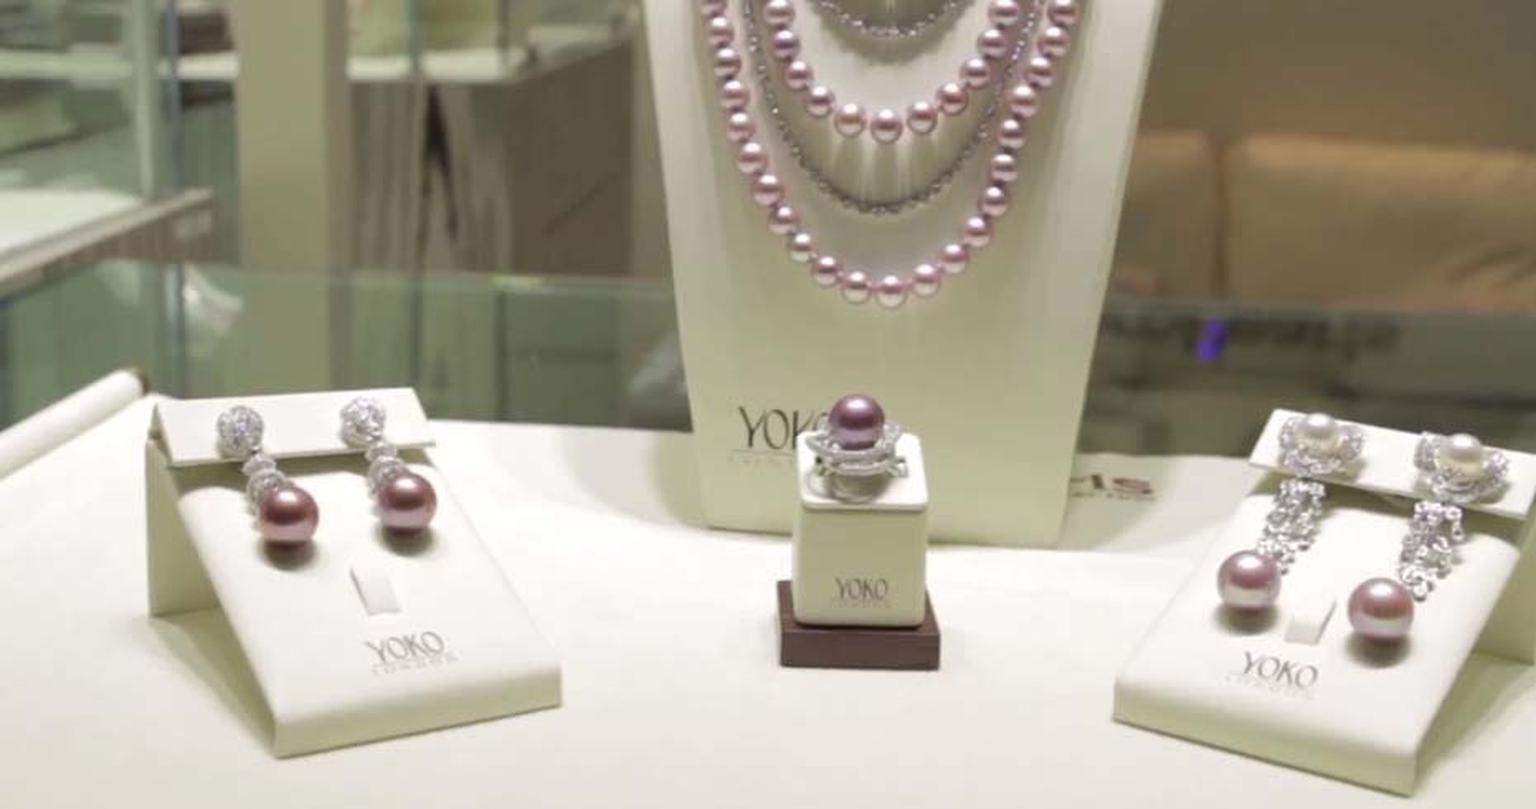 Yoko pearl necklace, earrings and bracelet.